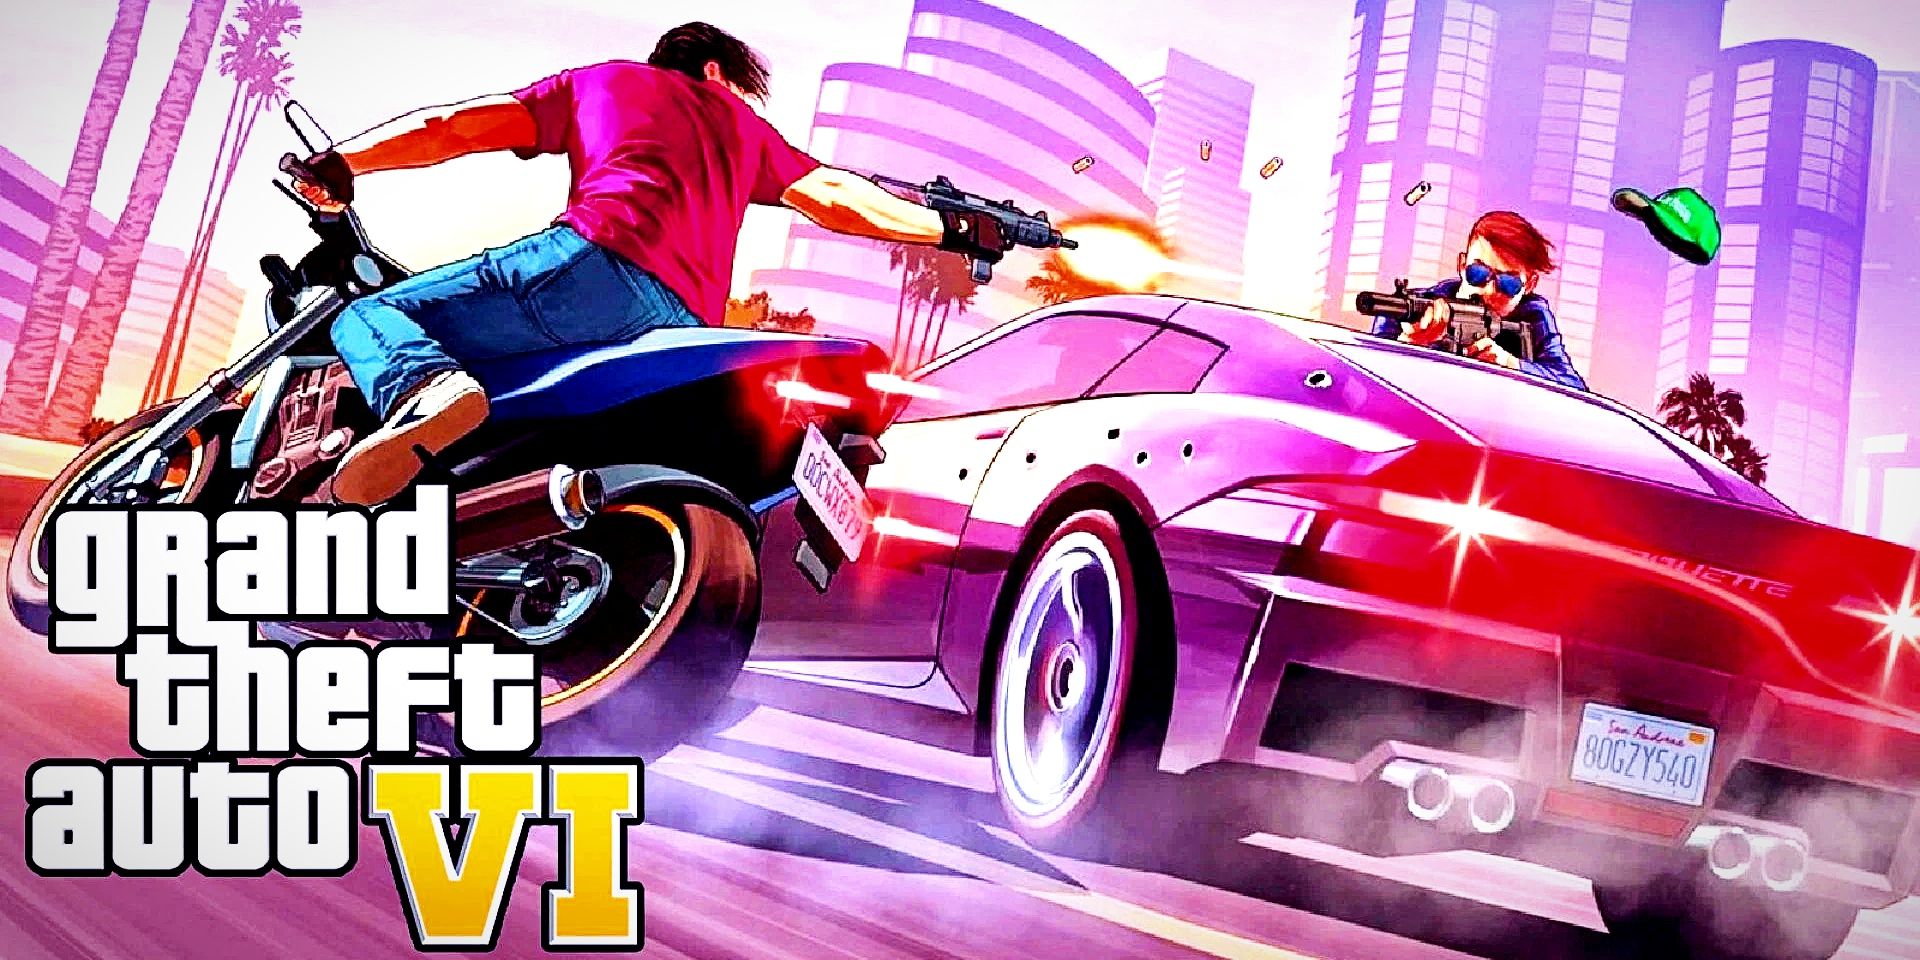 Grand Theft Auto 6: Rockstar Games drops major update on GTA 6